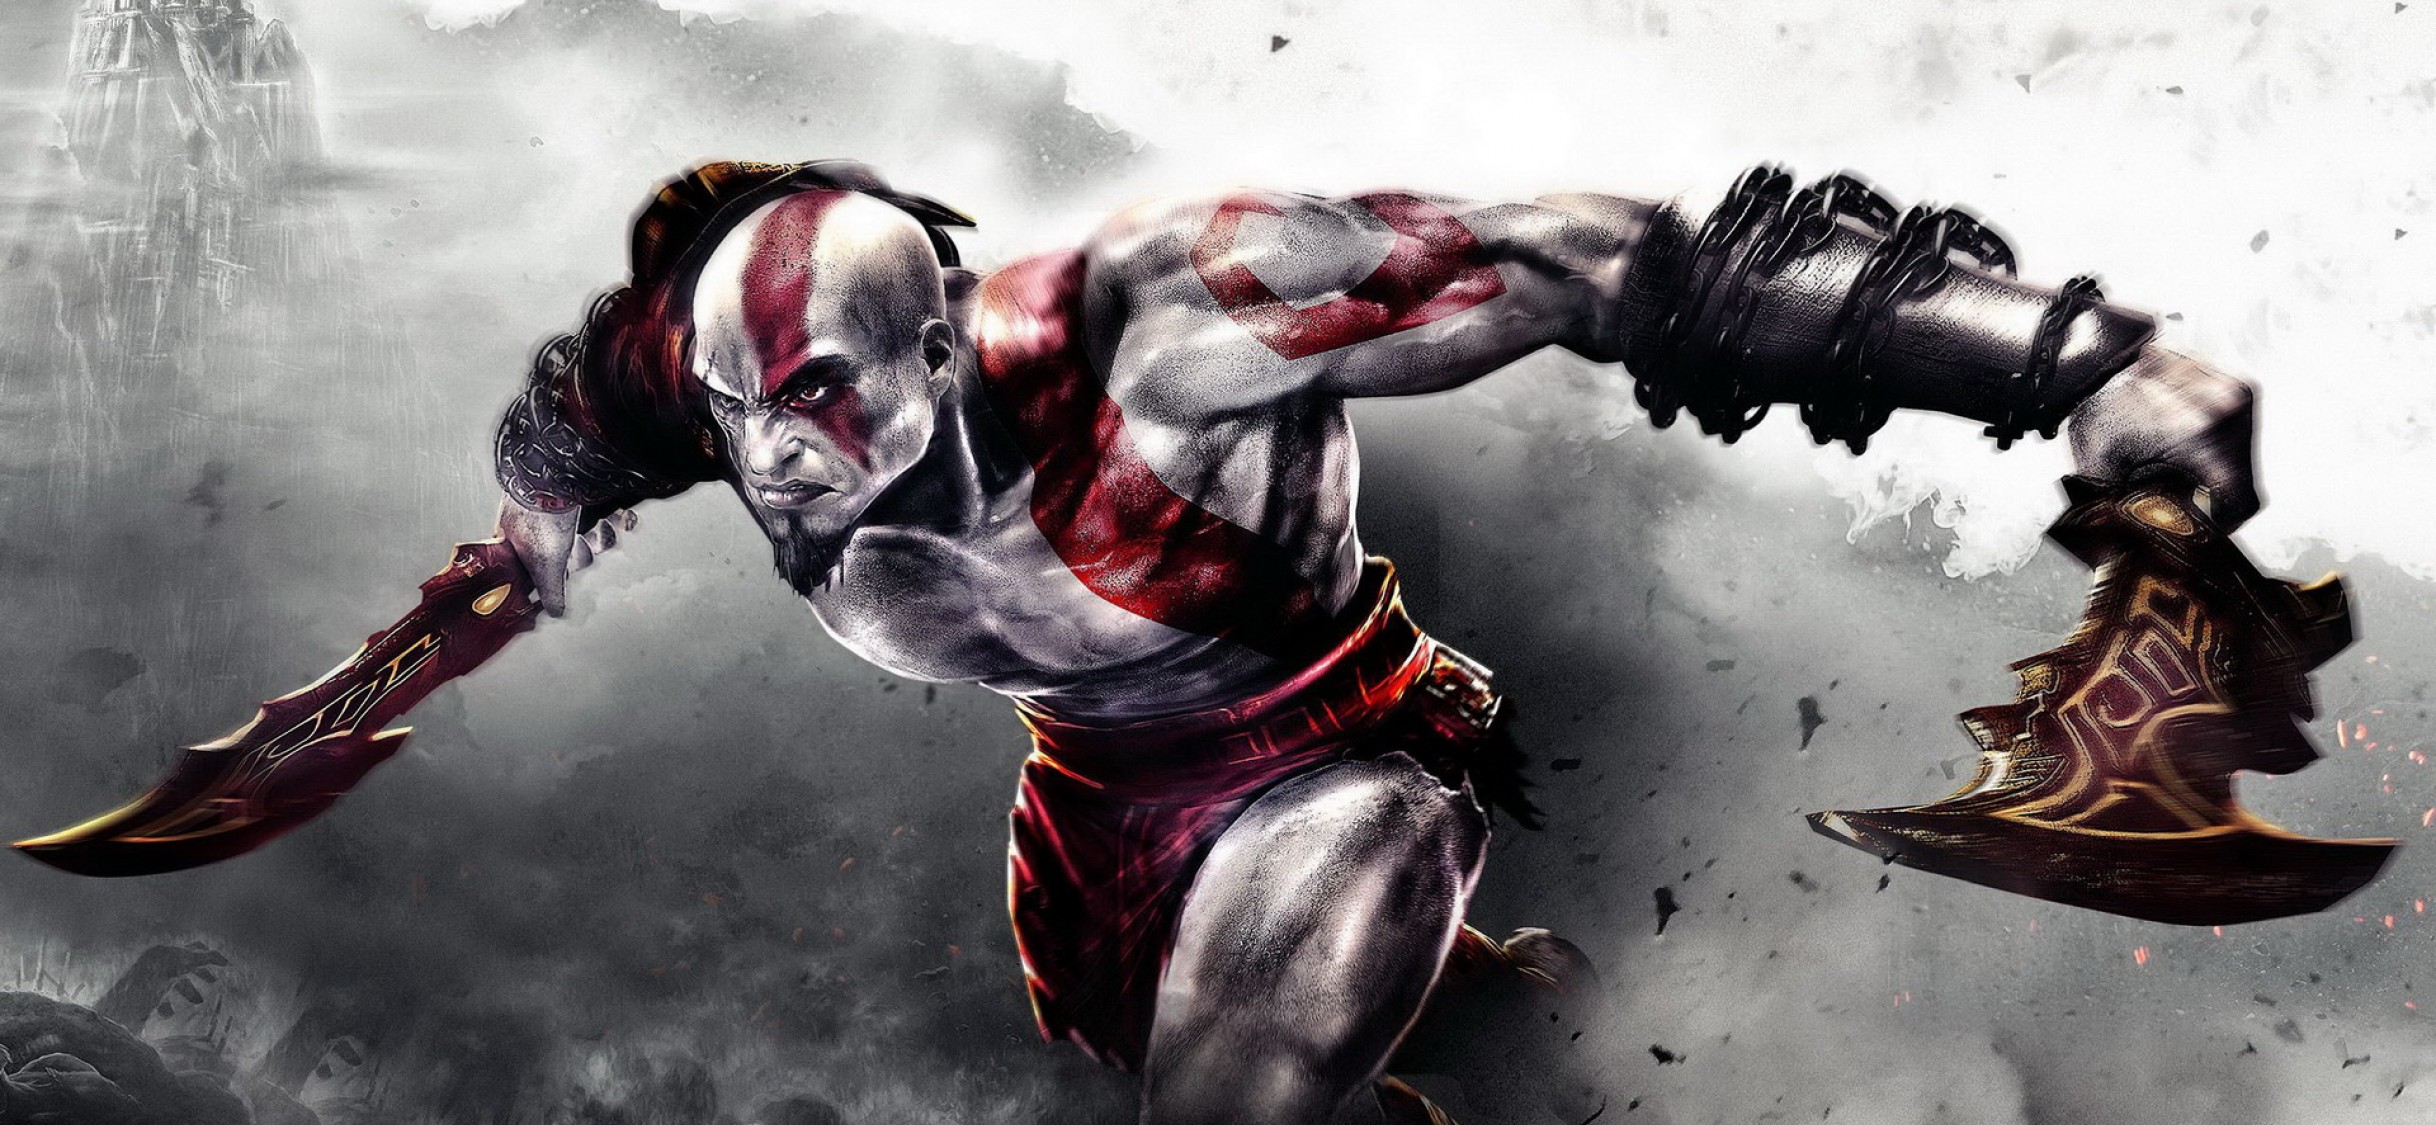 Kratos God Of War Hd Wallpaper For Desktop And Mobiles Iphone X Hd